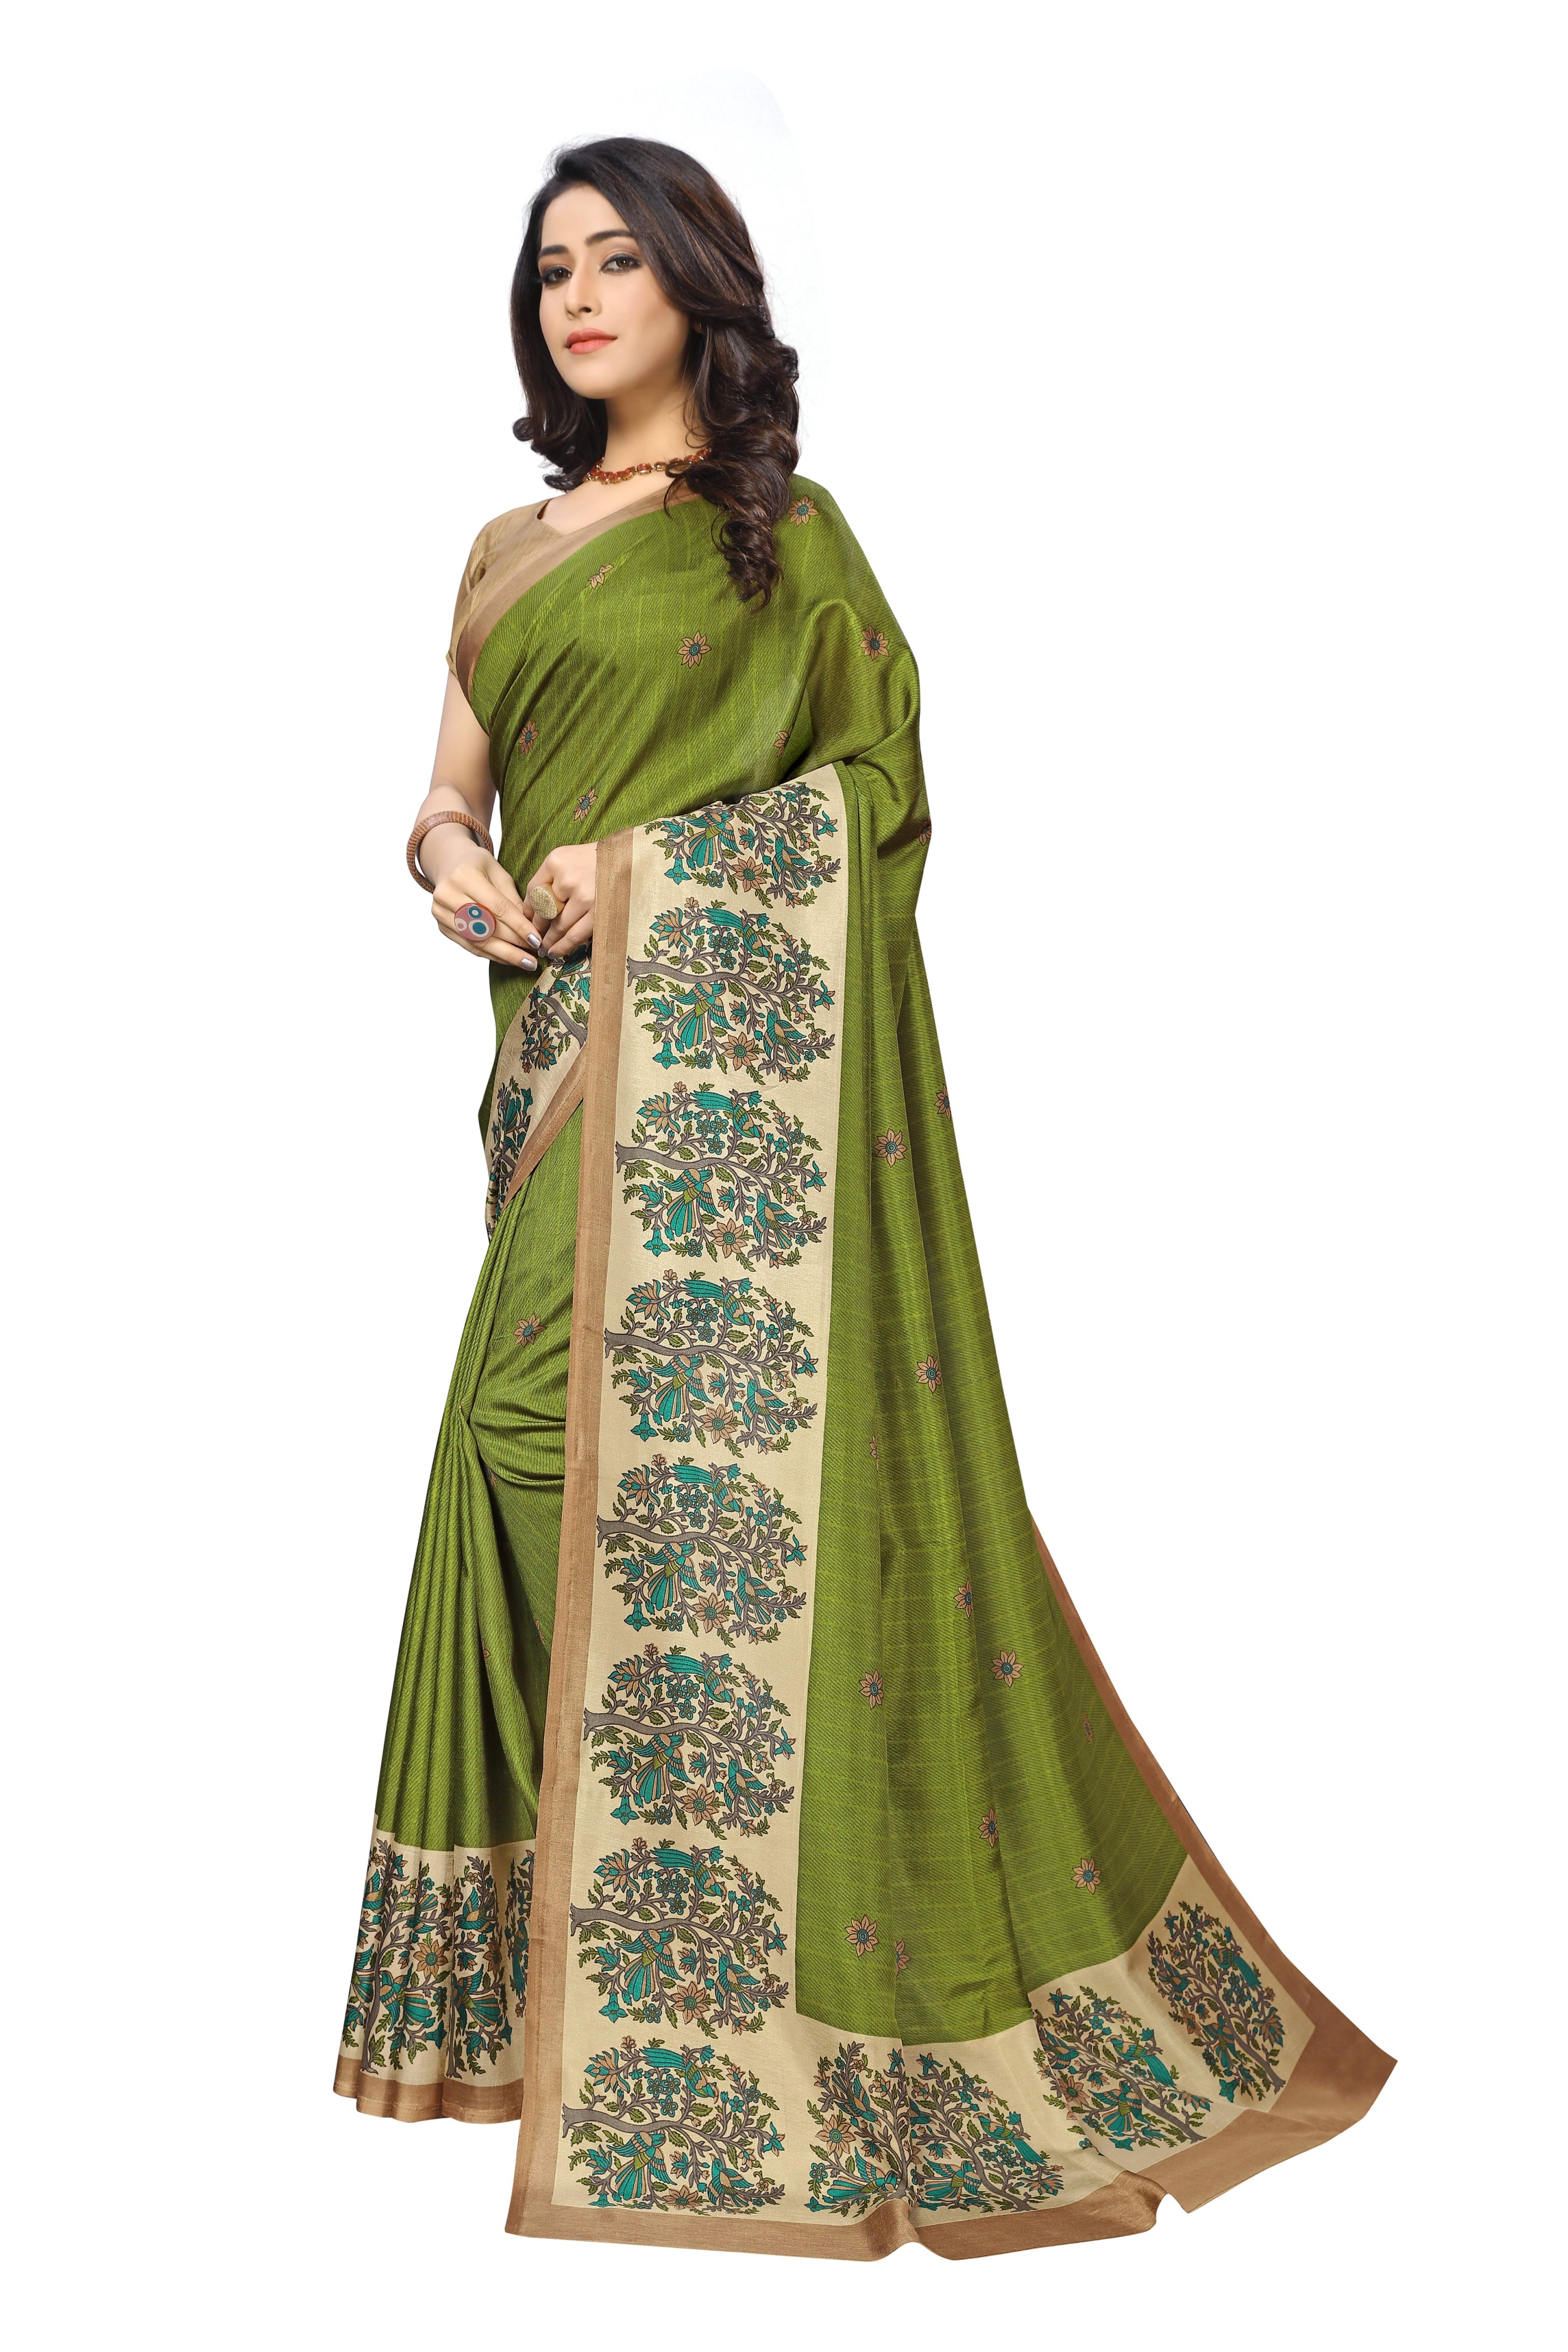 Vimla Women's Green Malgudi Art Silk Uniform Saree with Blouse Piece (2306_Green)